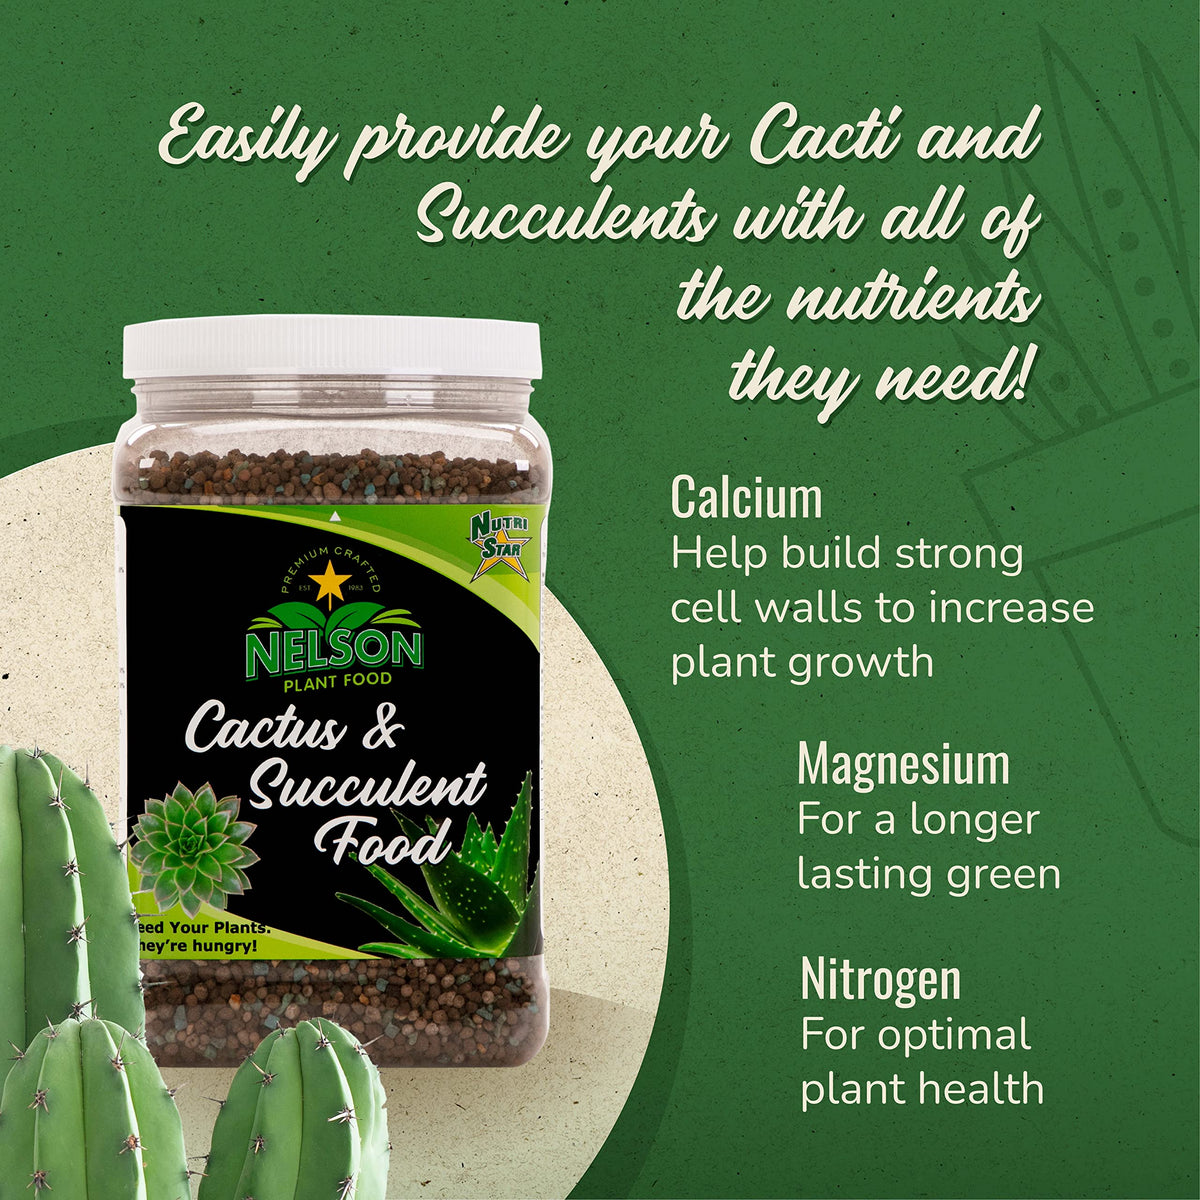 NutriStar Cactus and Succulent